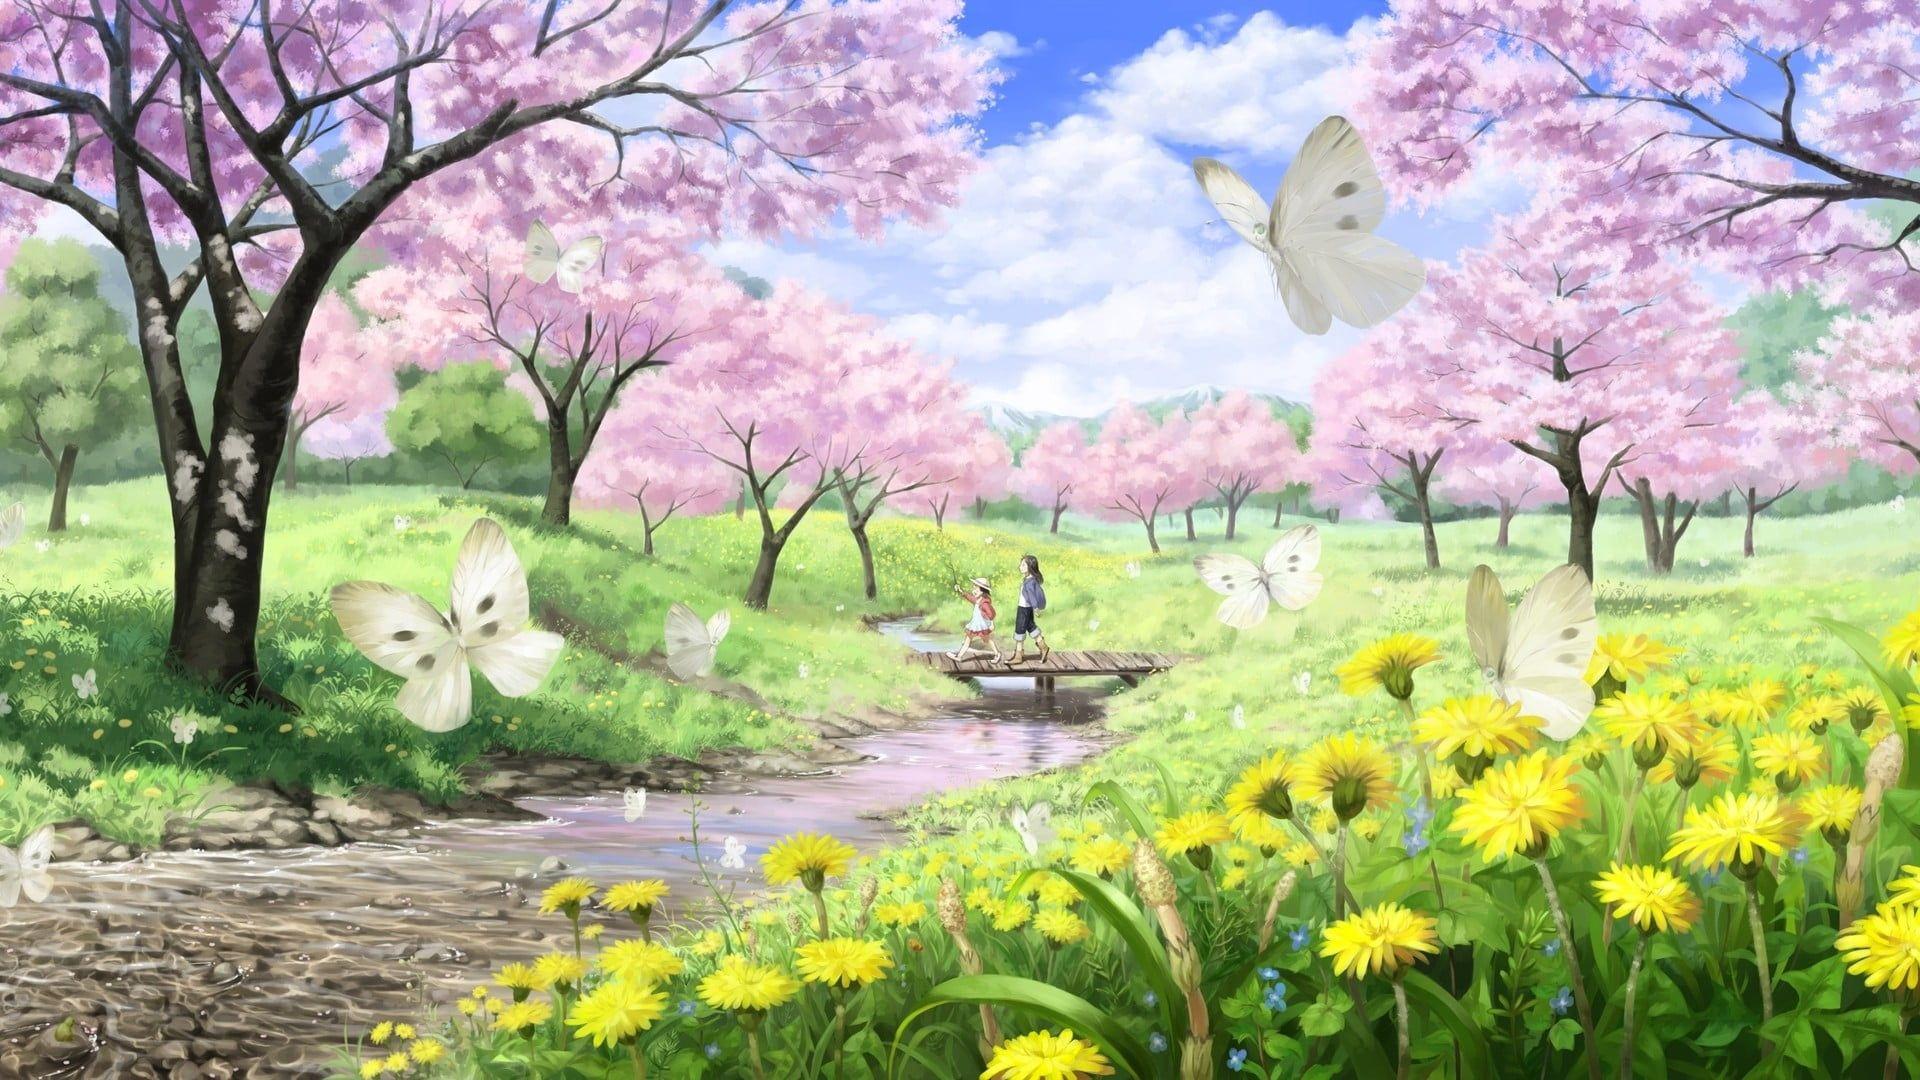 Howl's Flower Field | Studio ghibli background, Anime scenery, Howls moving  castle wallpaper